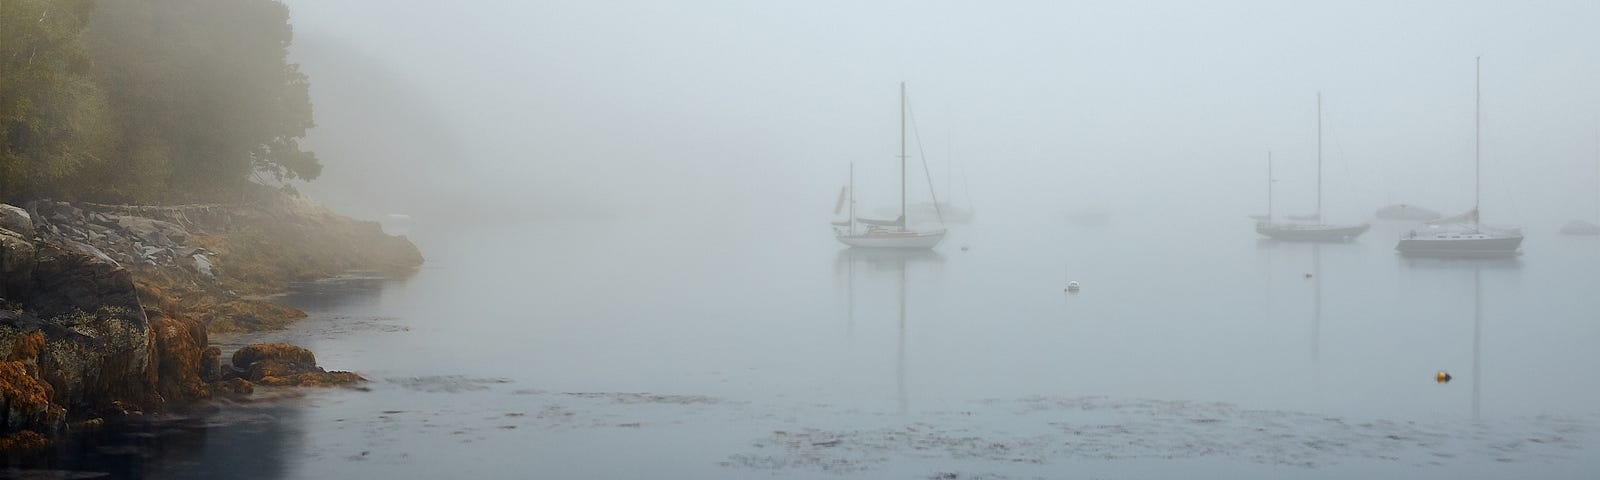 Sailboats suspended in fog as autumn foliage bathes the Maine coastline.